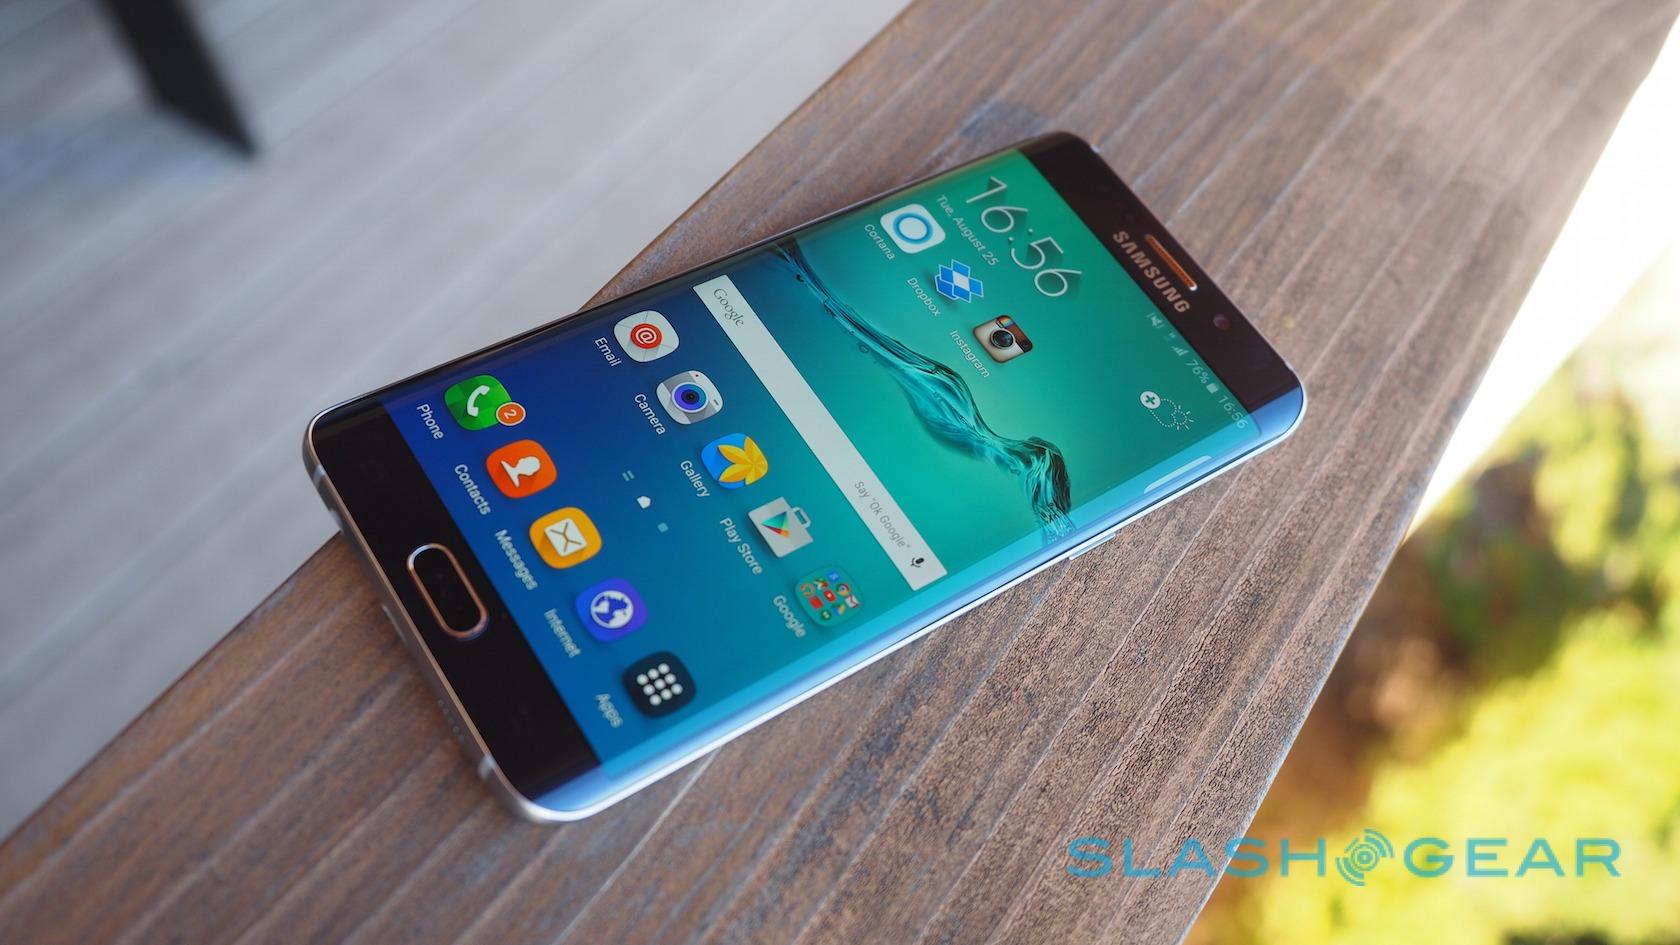 Samsung Galaxy S6 edge+ - SlashGear